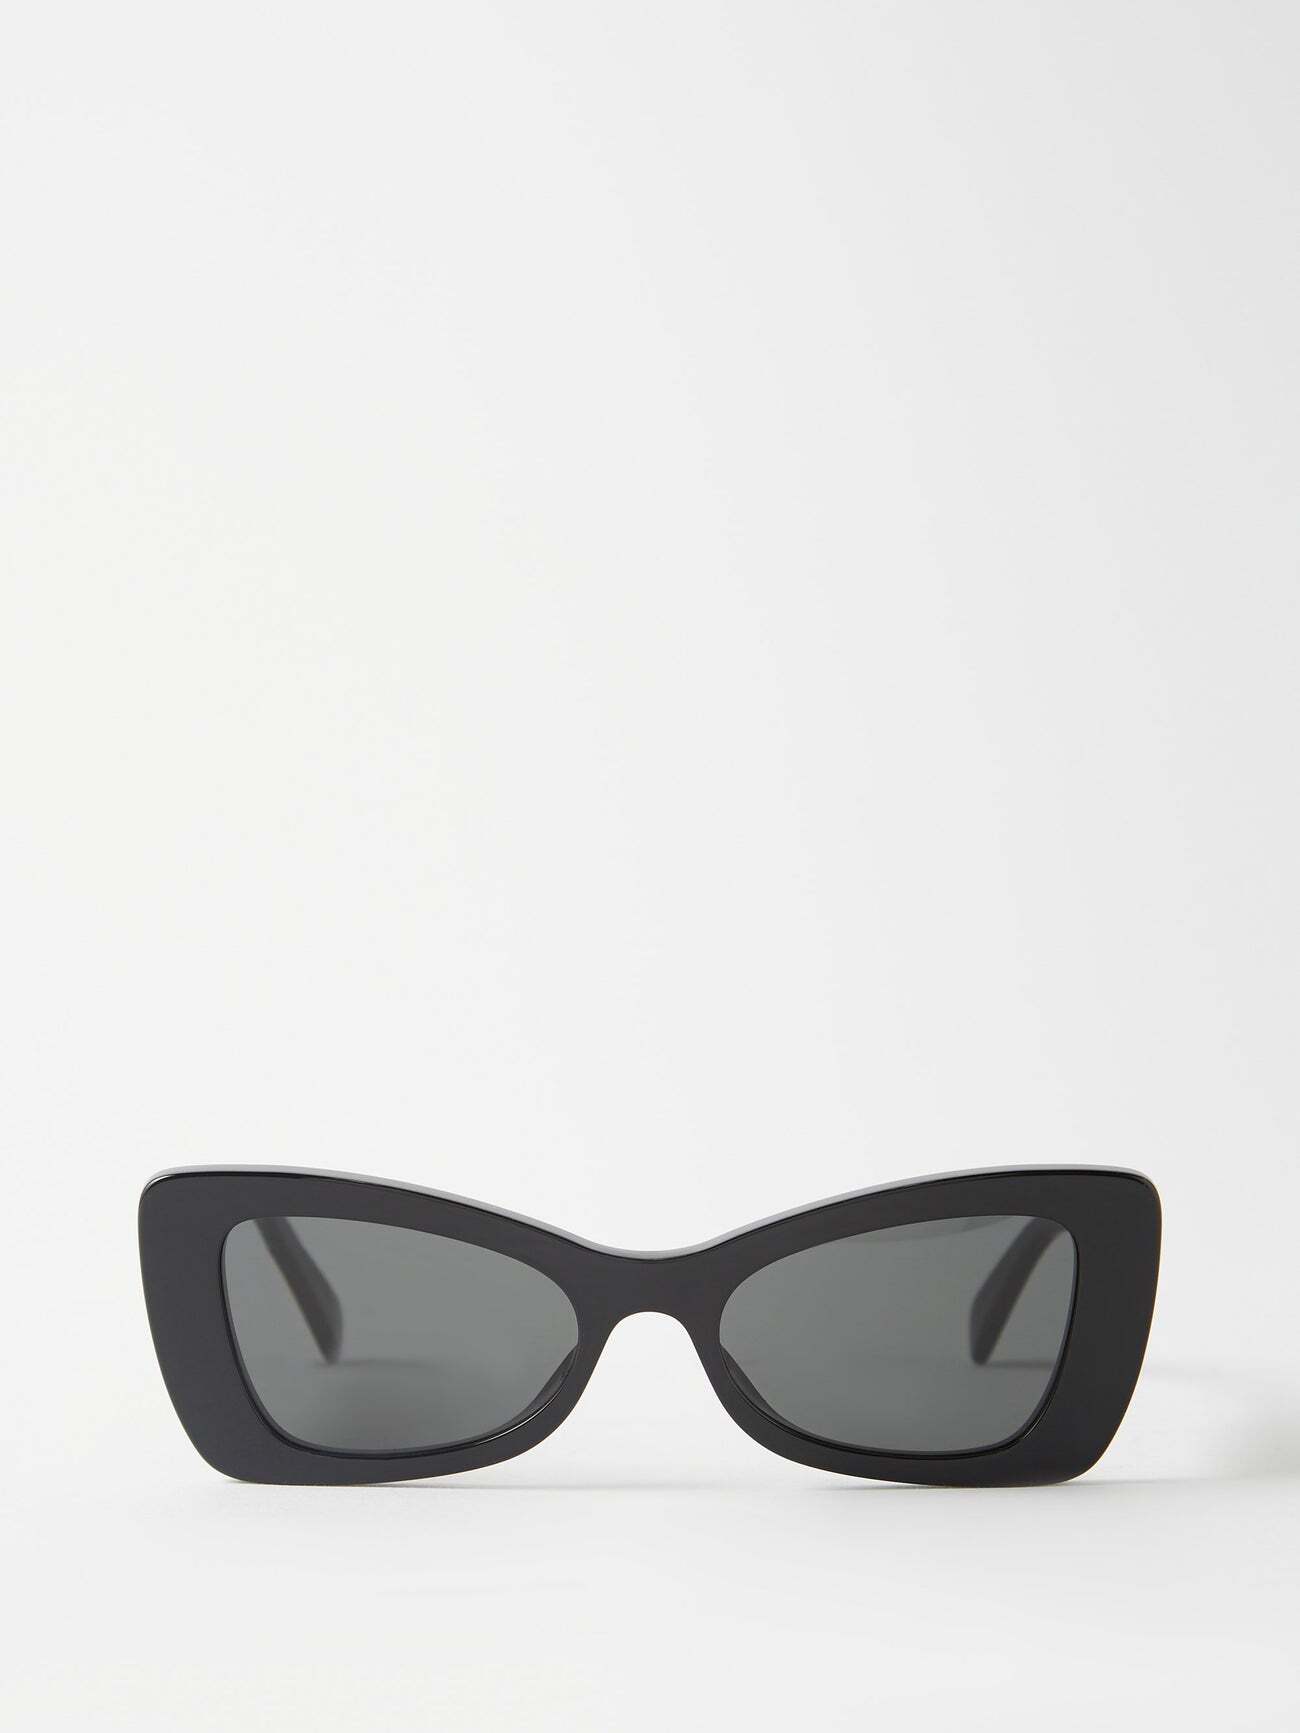 Celine Eyewear - Cat-eye Acetate Sunglasses - Womens - Black